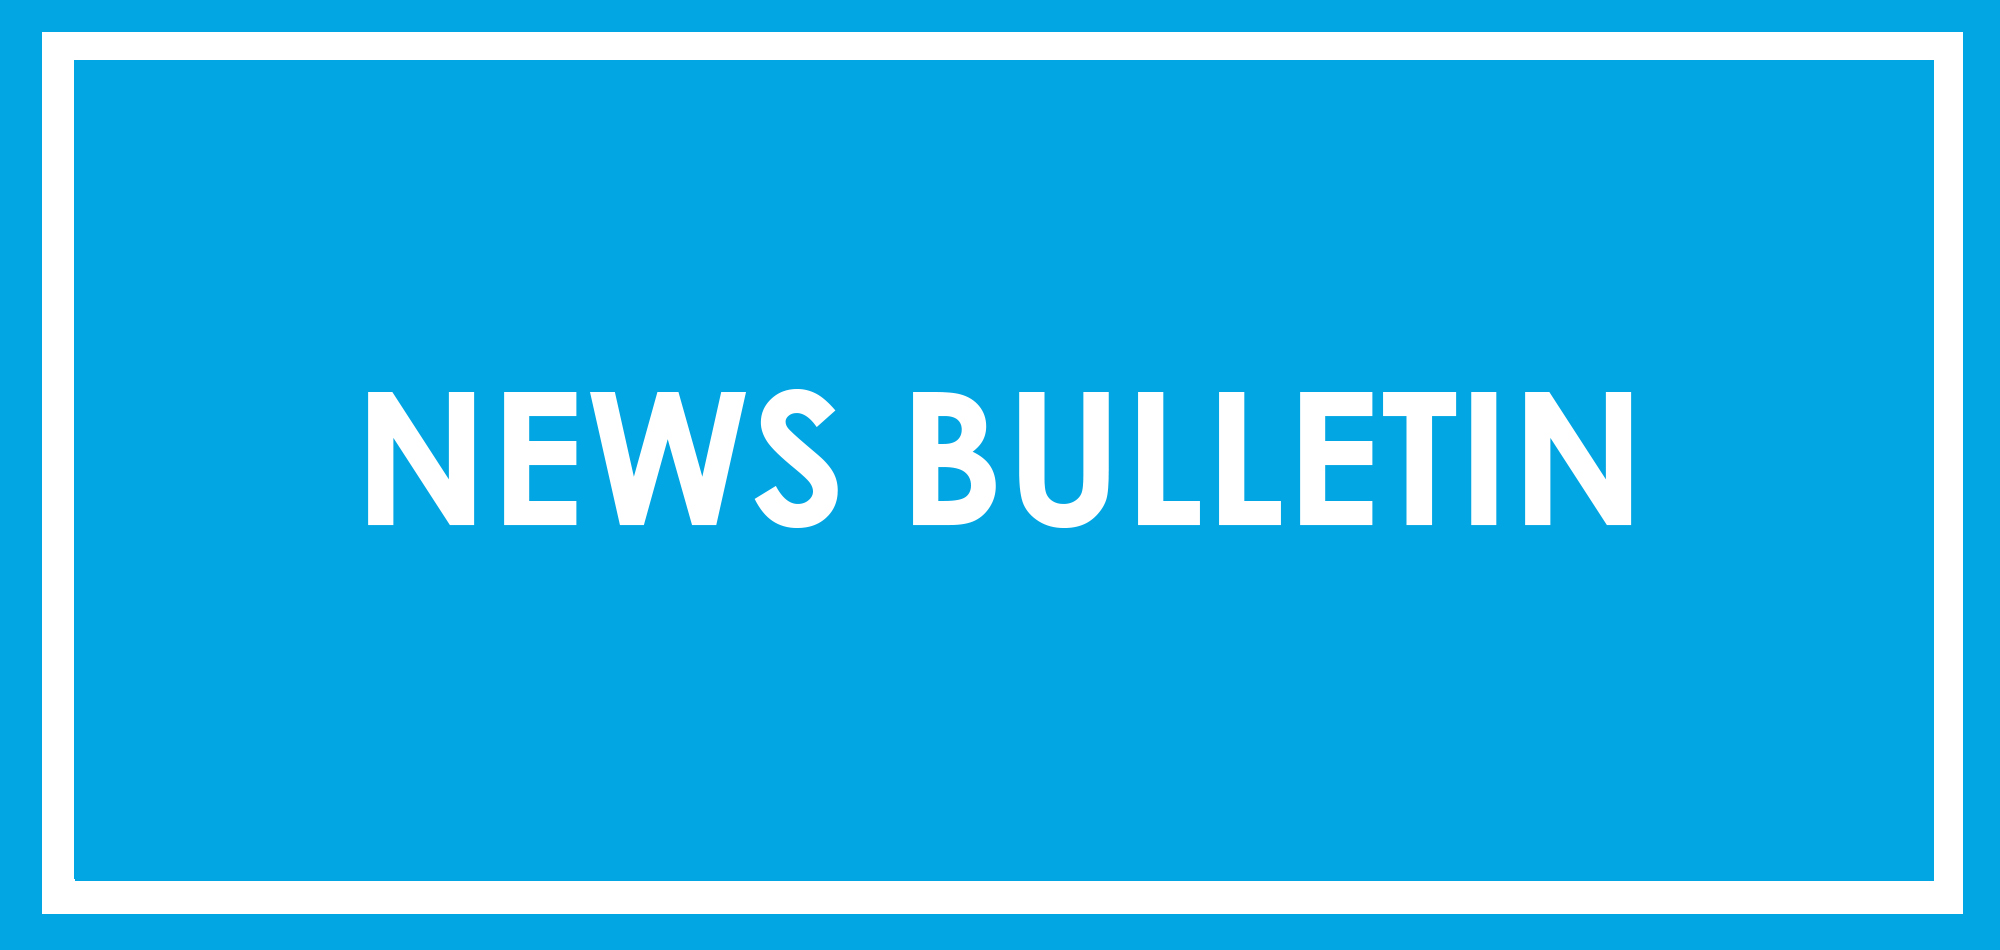 News Bulletin - 03.07.22